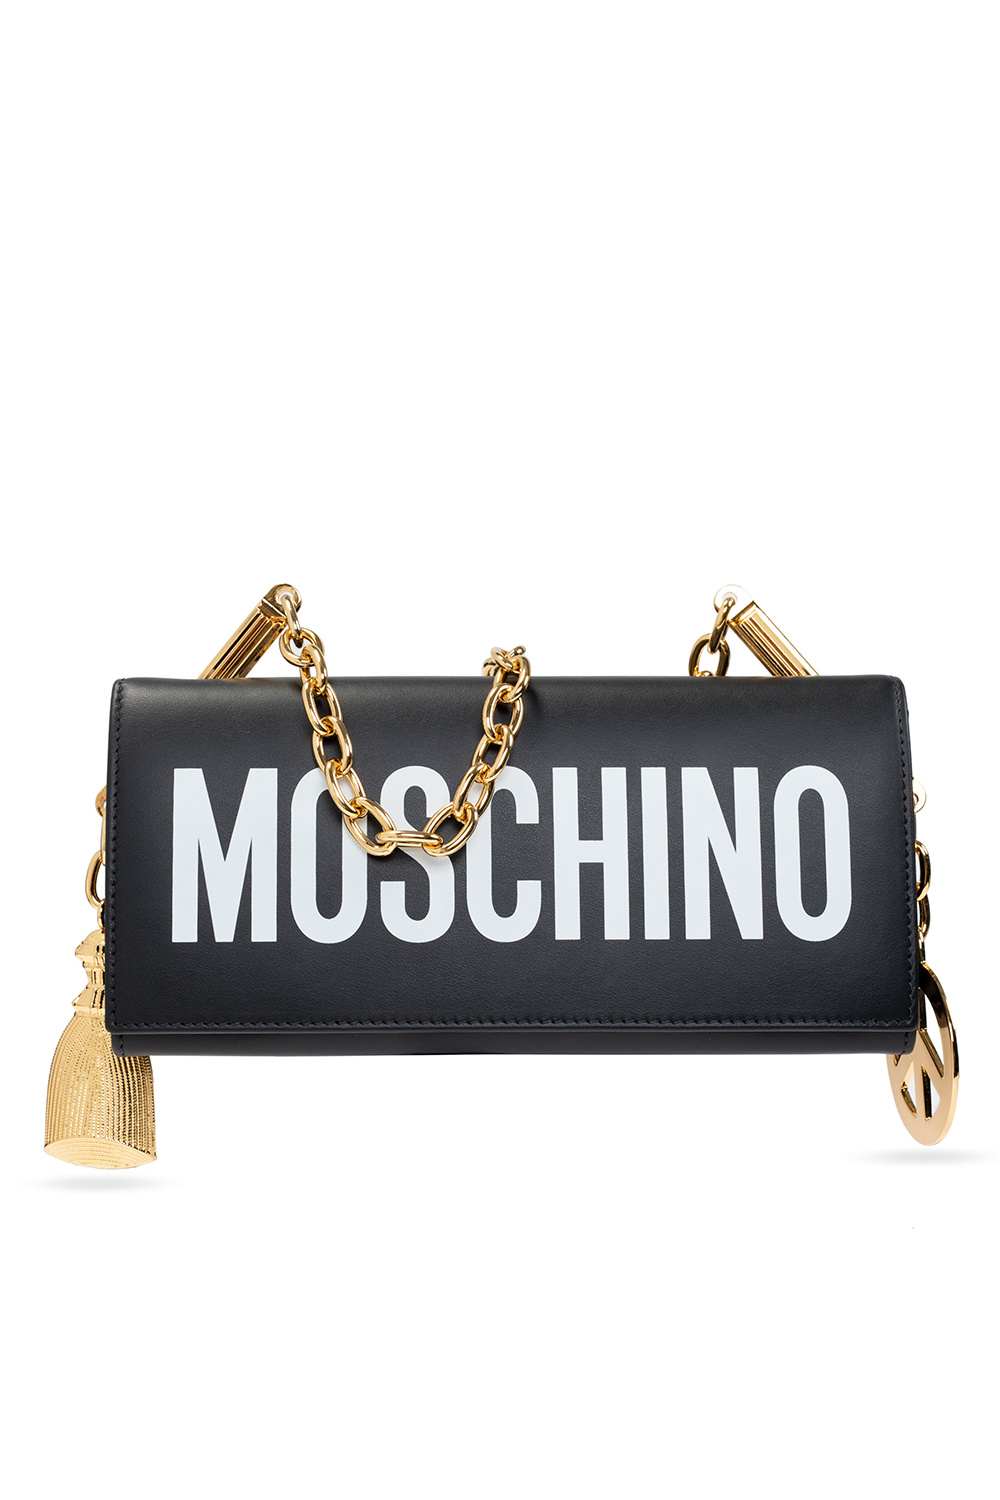 Moschino wash bag with logo paul smith bag espagh